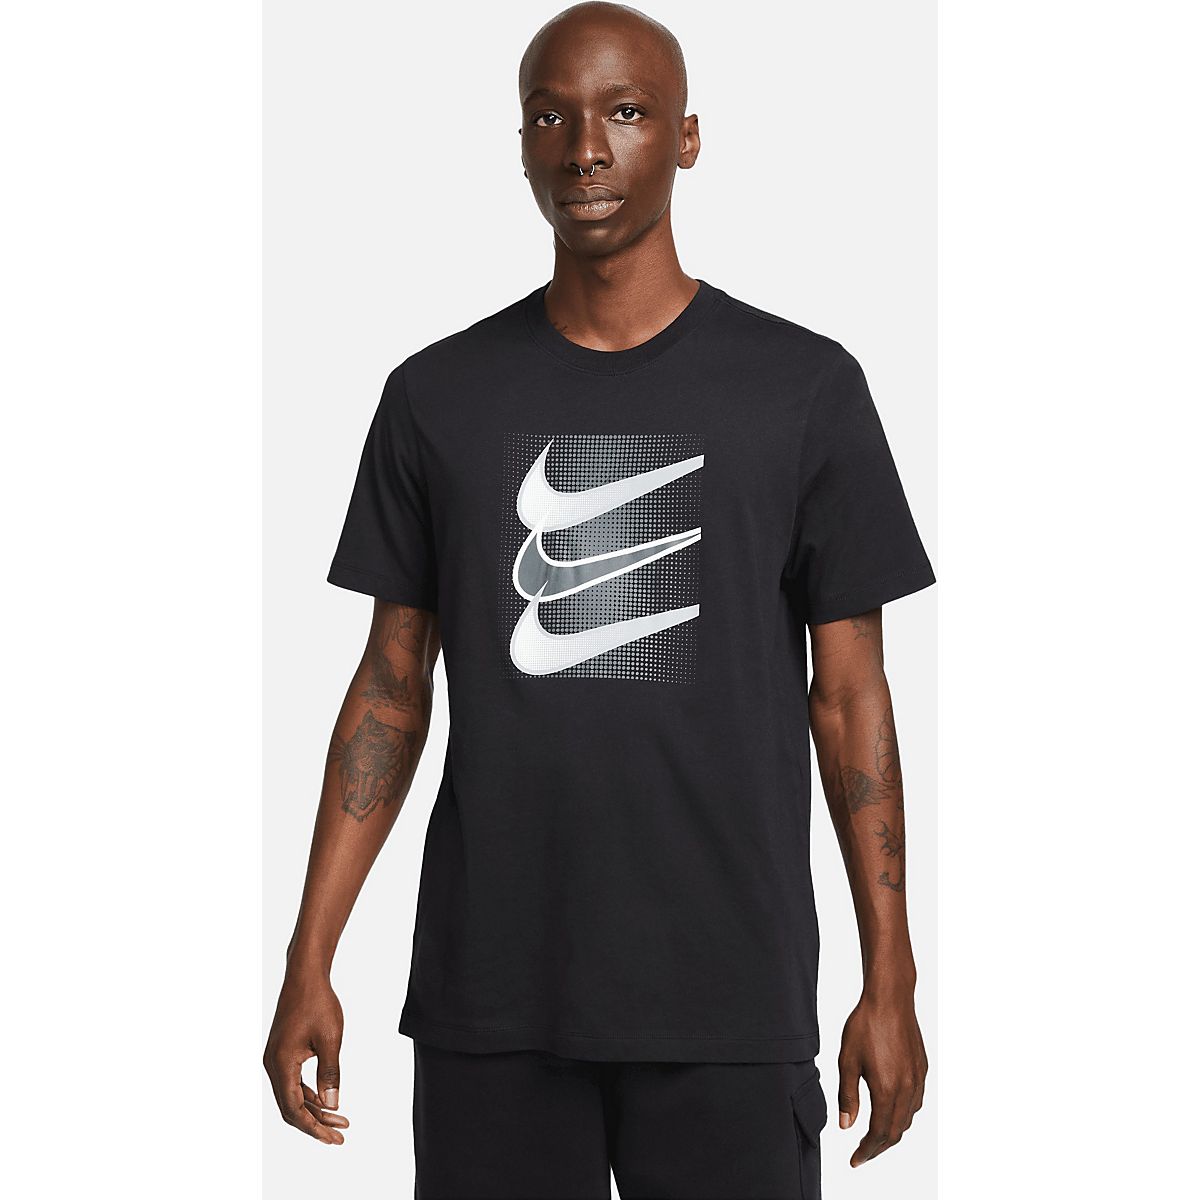 Nike Men's Swoosh T-shirt | Free Shipping at Academy